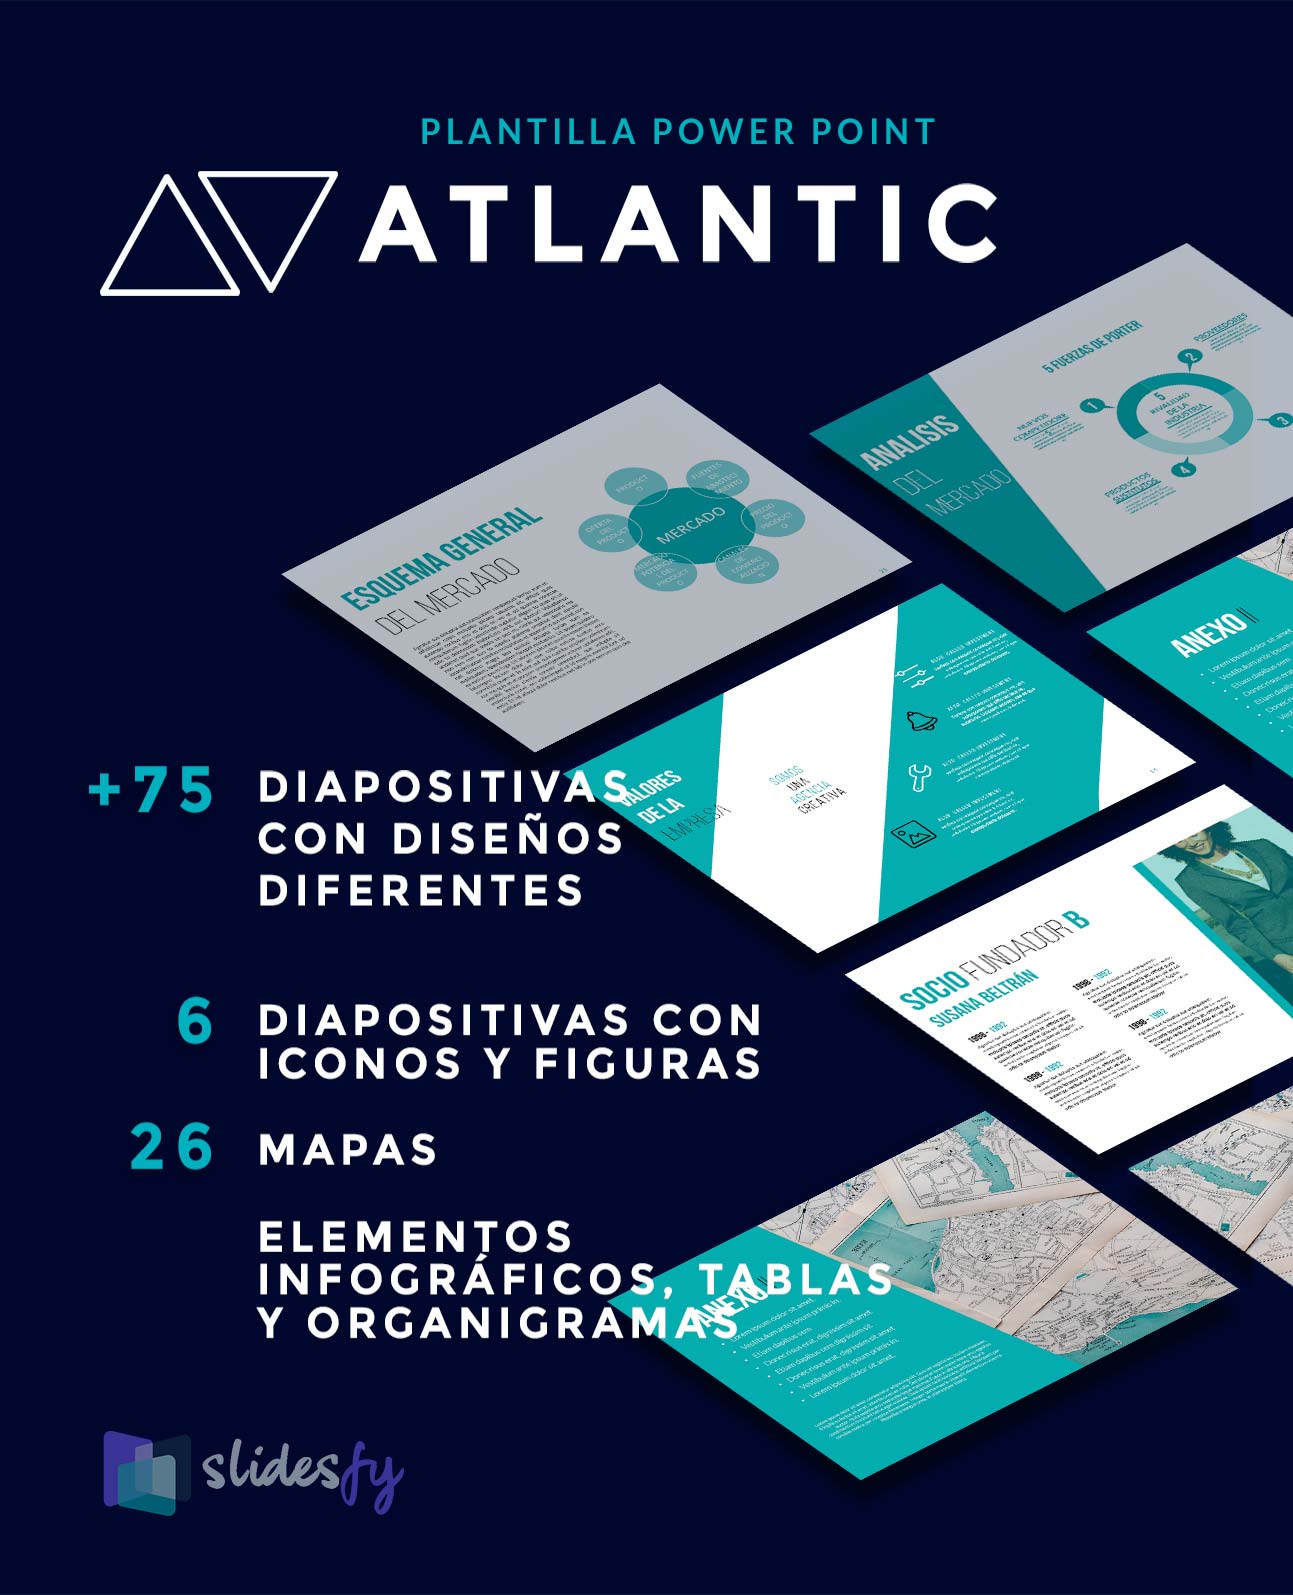 Plantilla Power Point plan de empresa atlantic